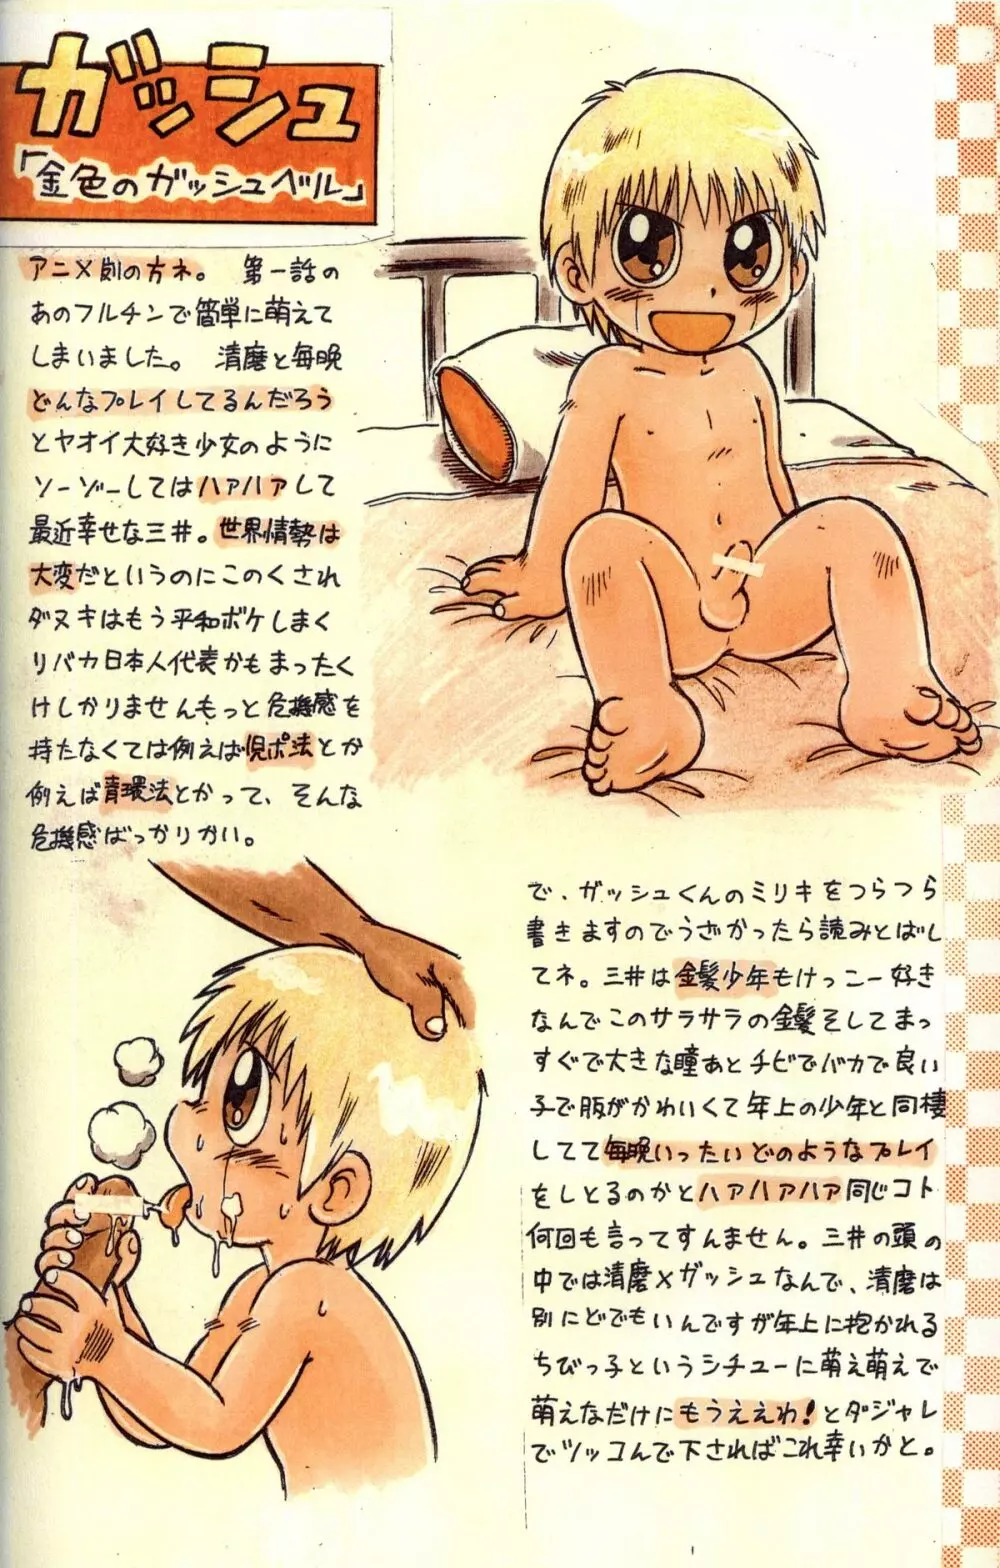 Mitsui Jun - Dreamer's Only 4 Page.10